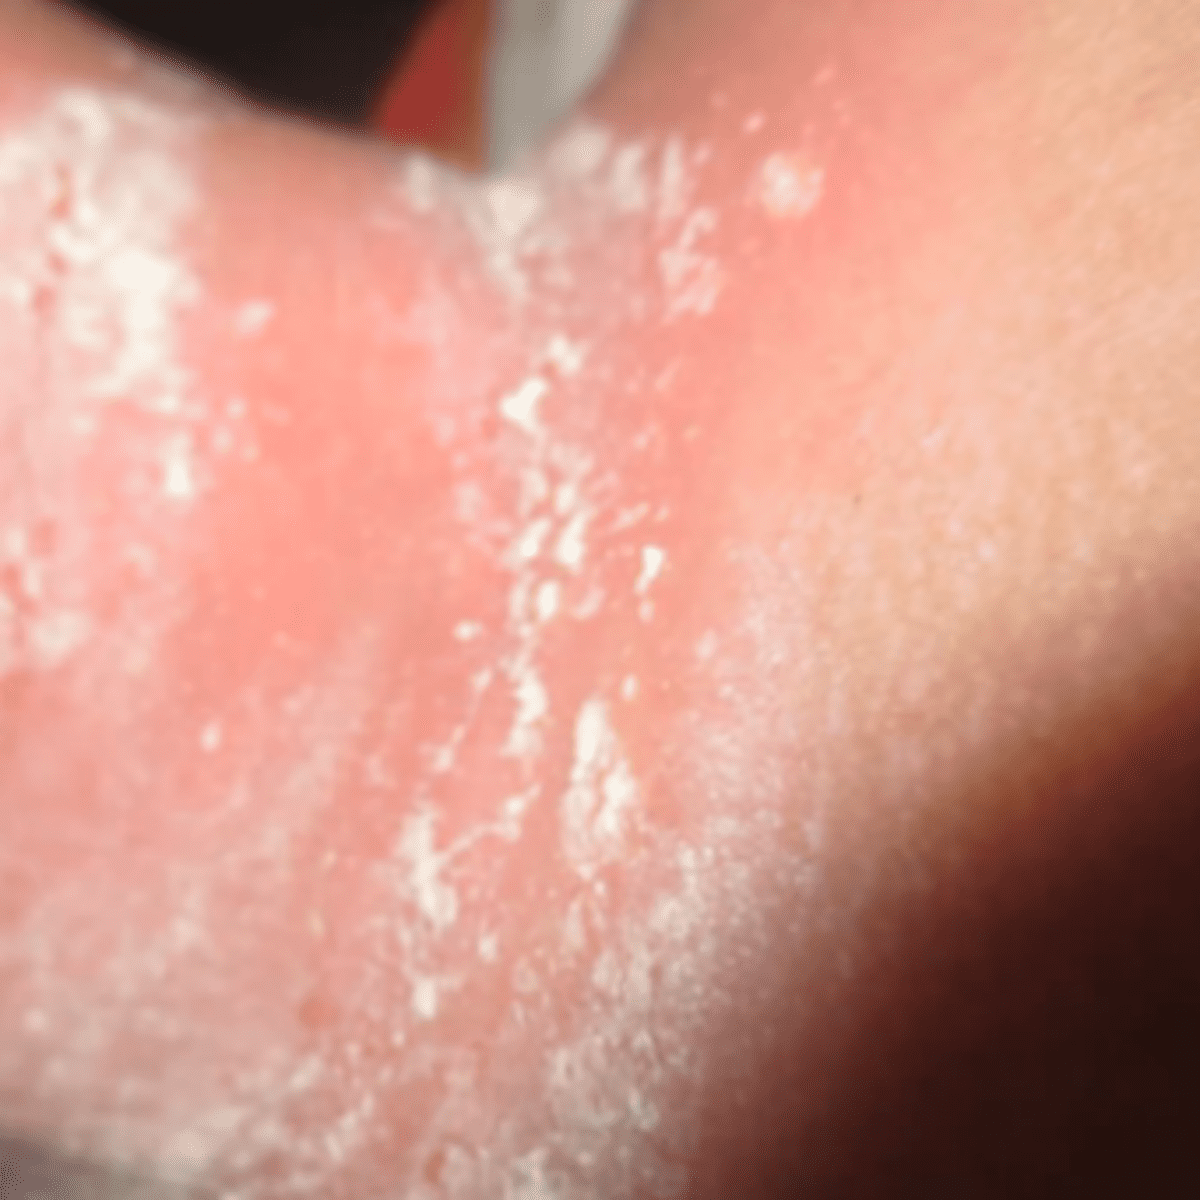 Intertrigo rash under elderly woman's breast - Stock Image - M180/0082 -  Science Photo Library